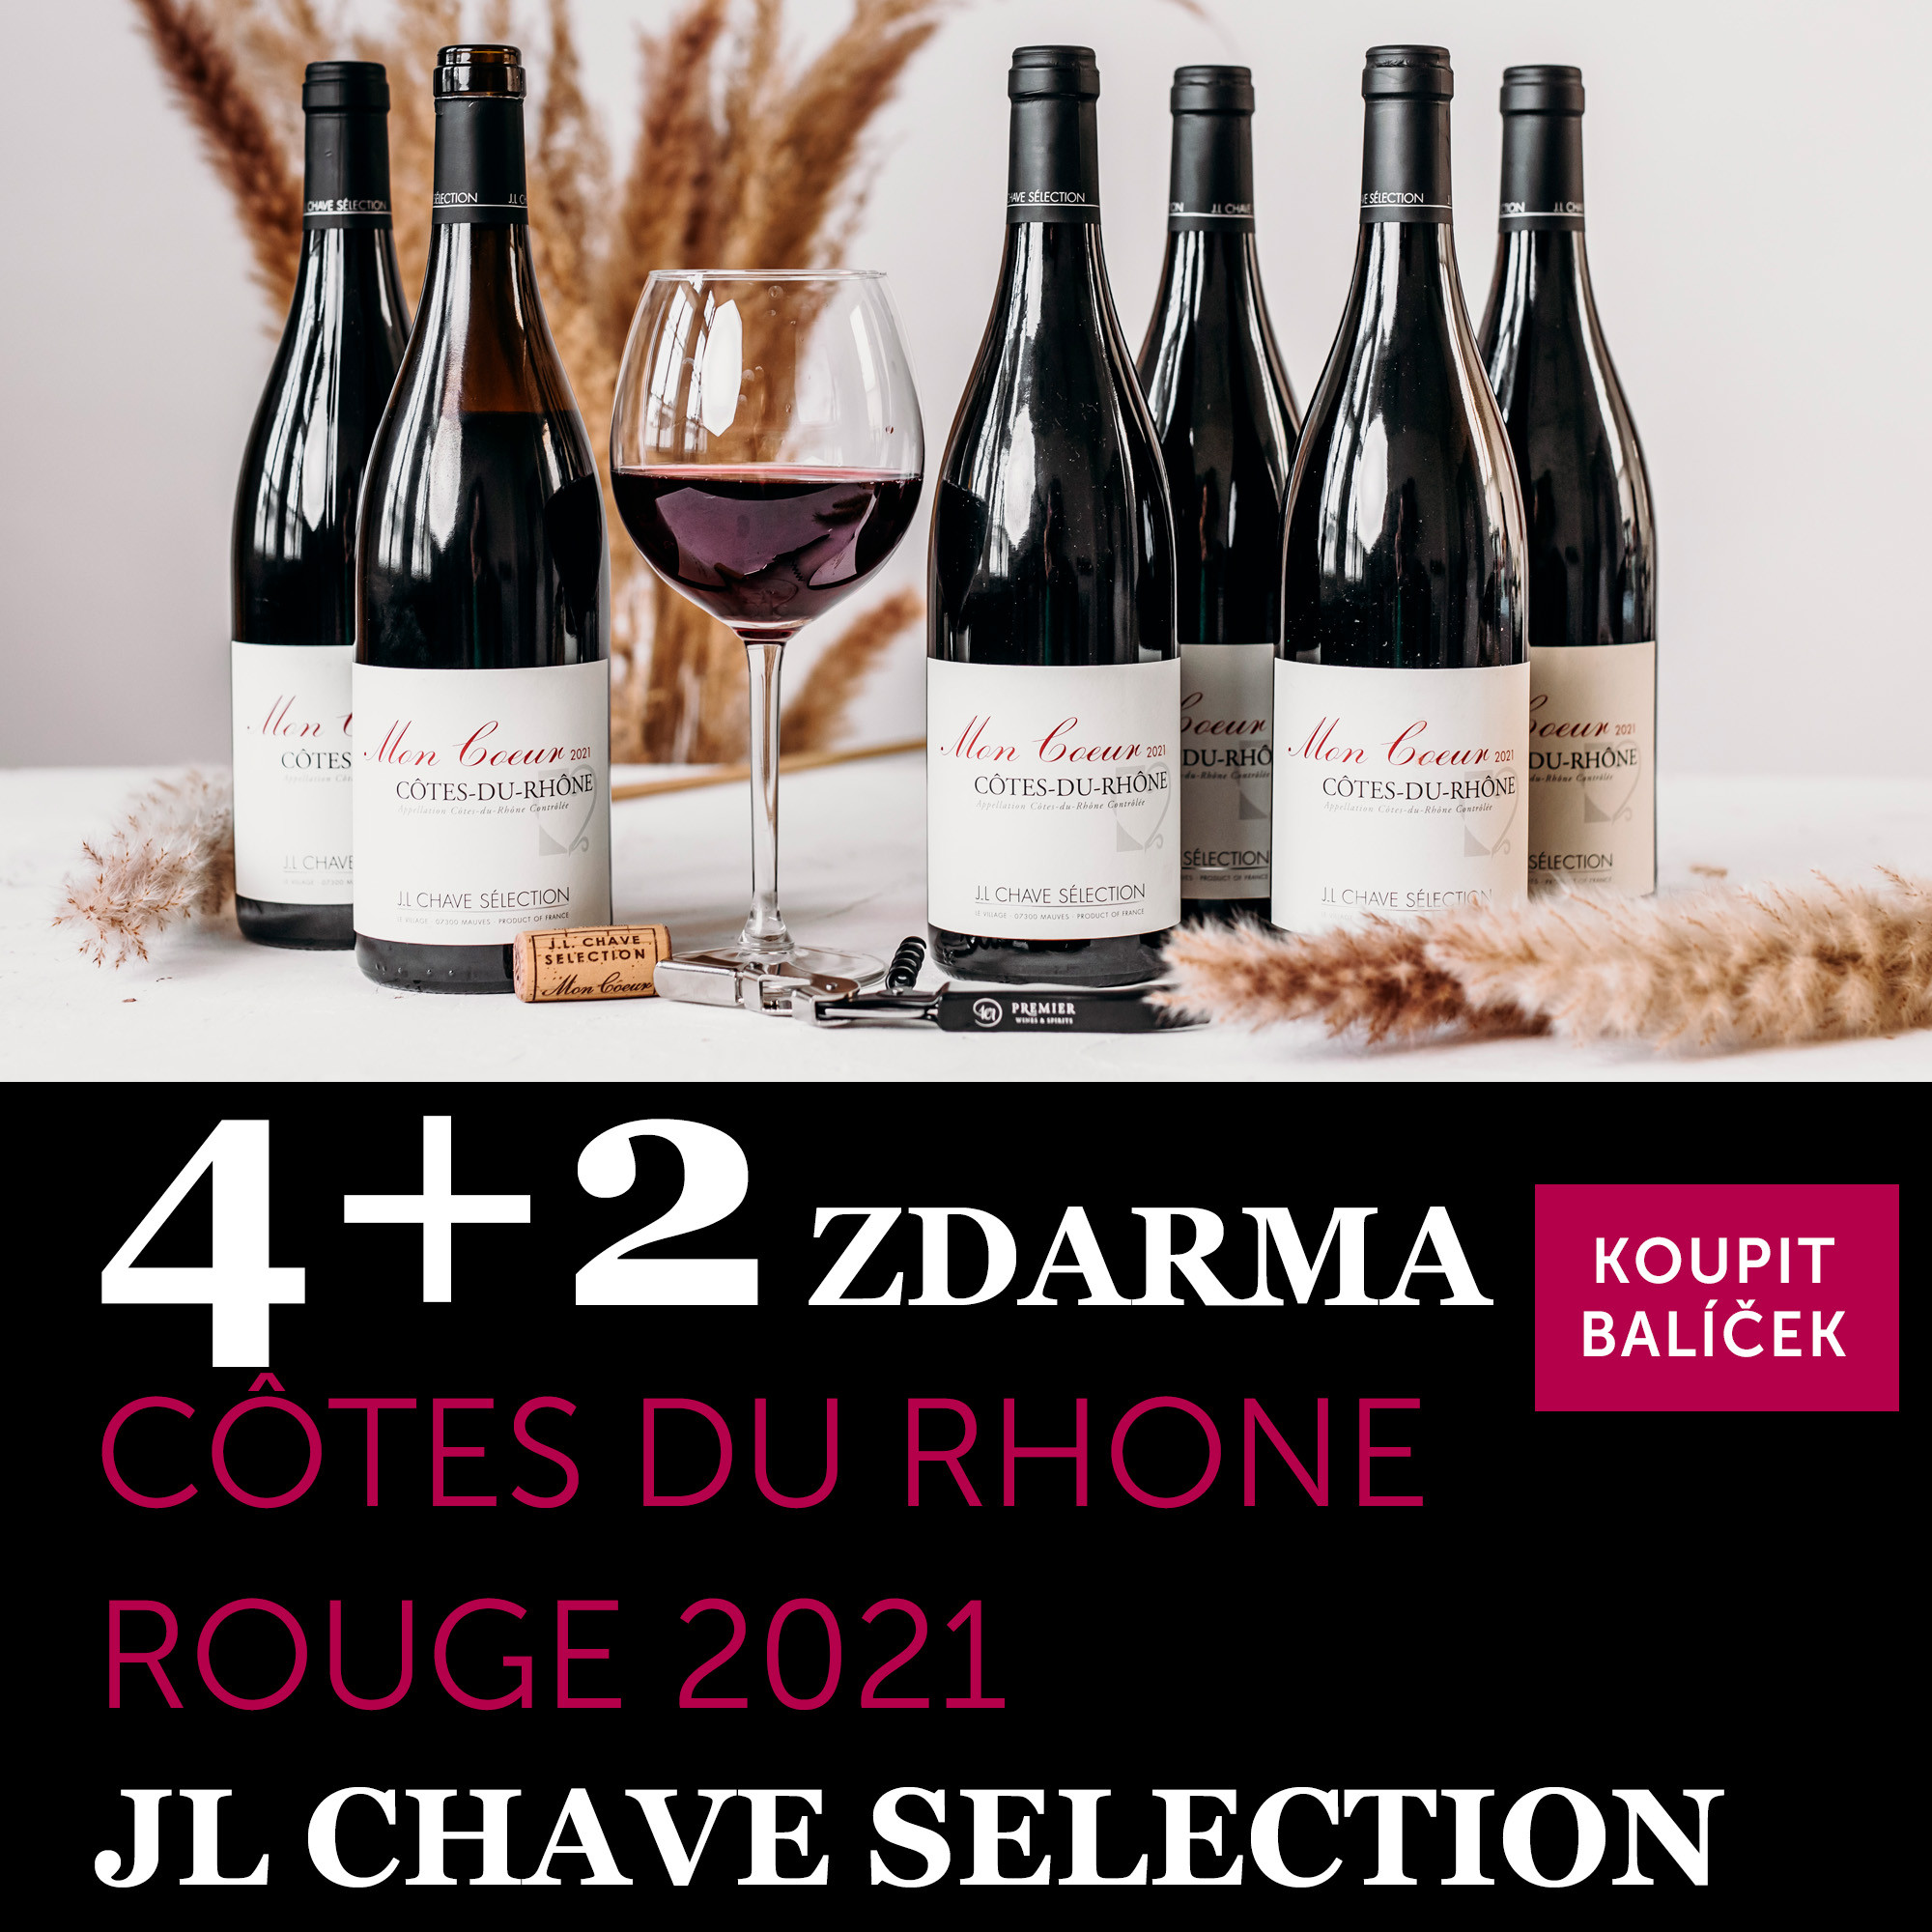 JL Chave Selection Cotes du Rhone Mon Coeur 2021 4+2 zdarma - UKONČENO 